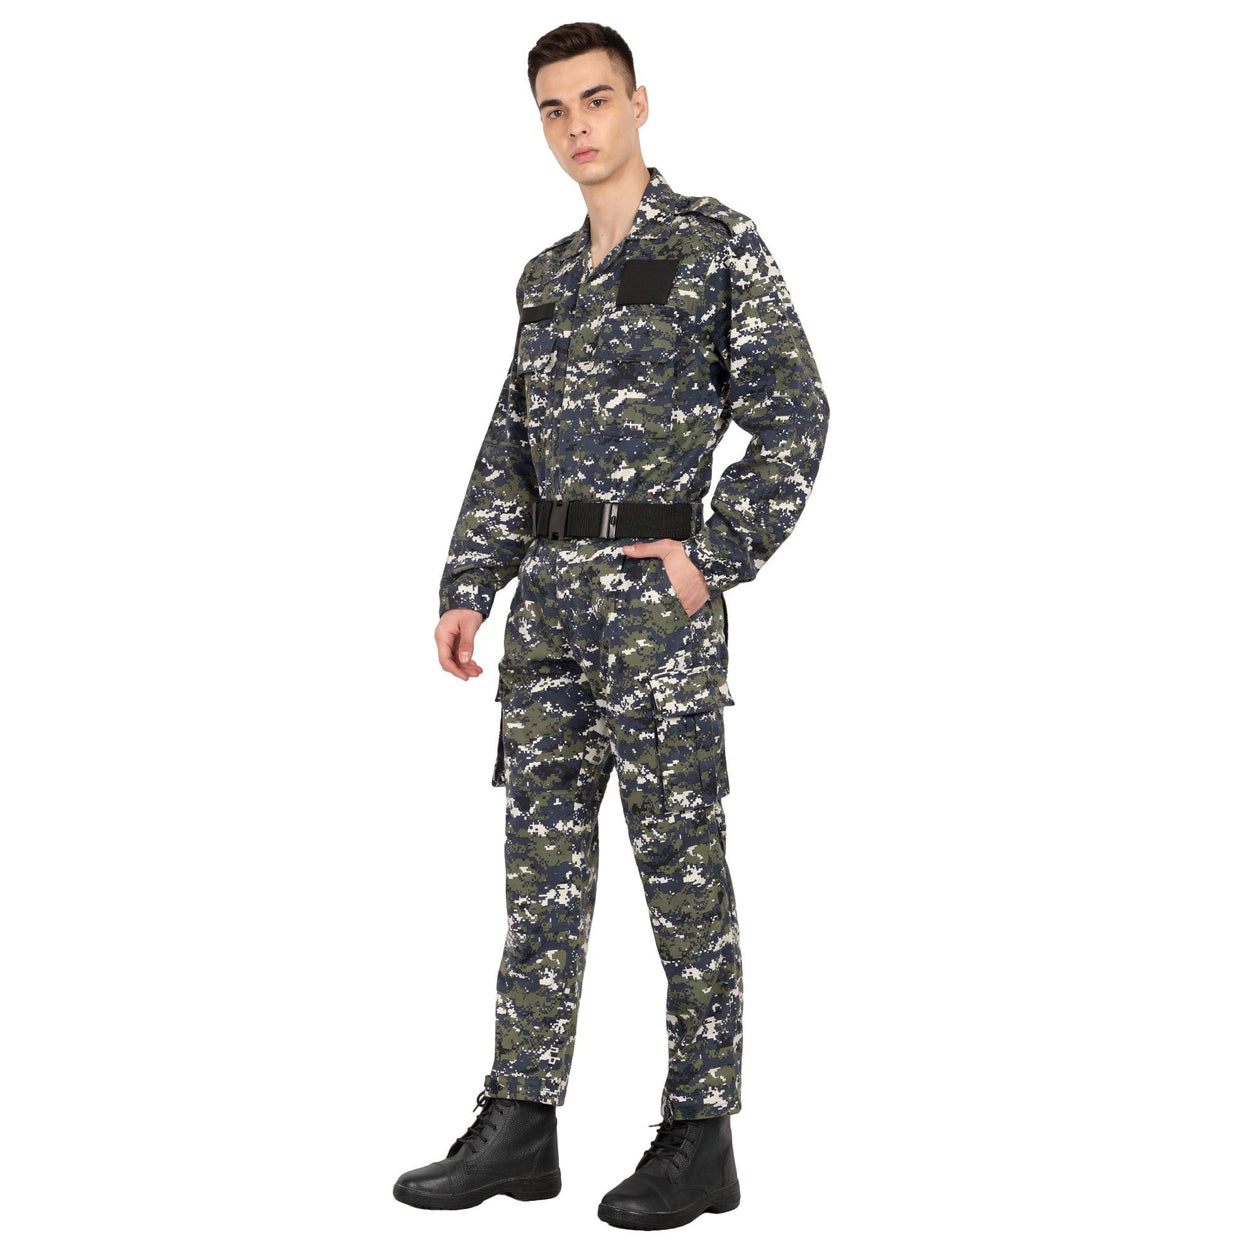 indian navy new uniform